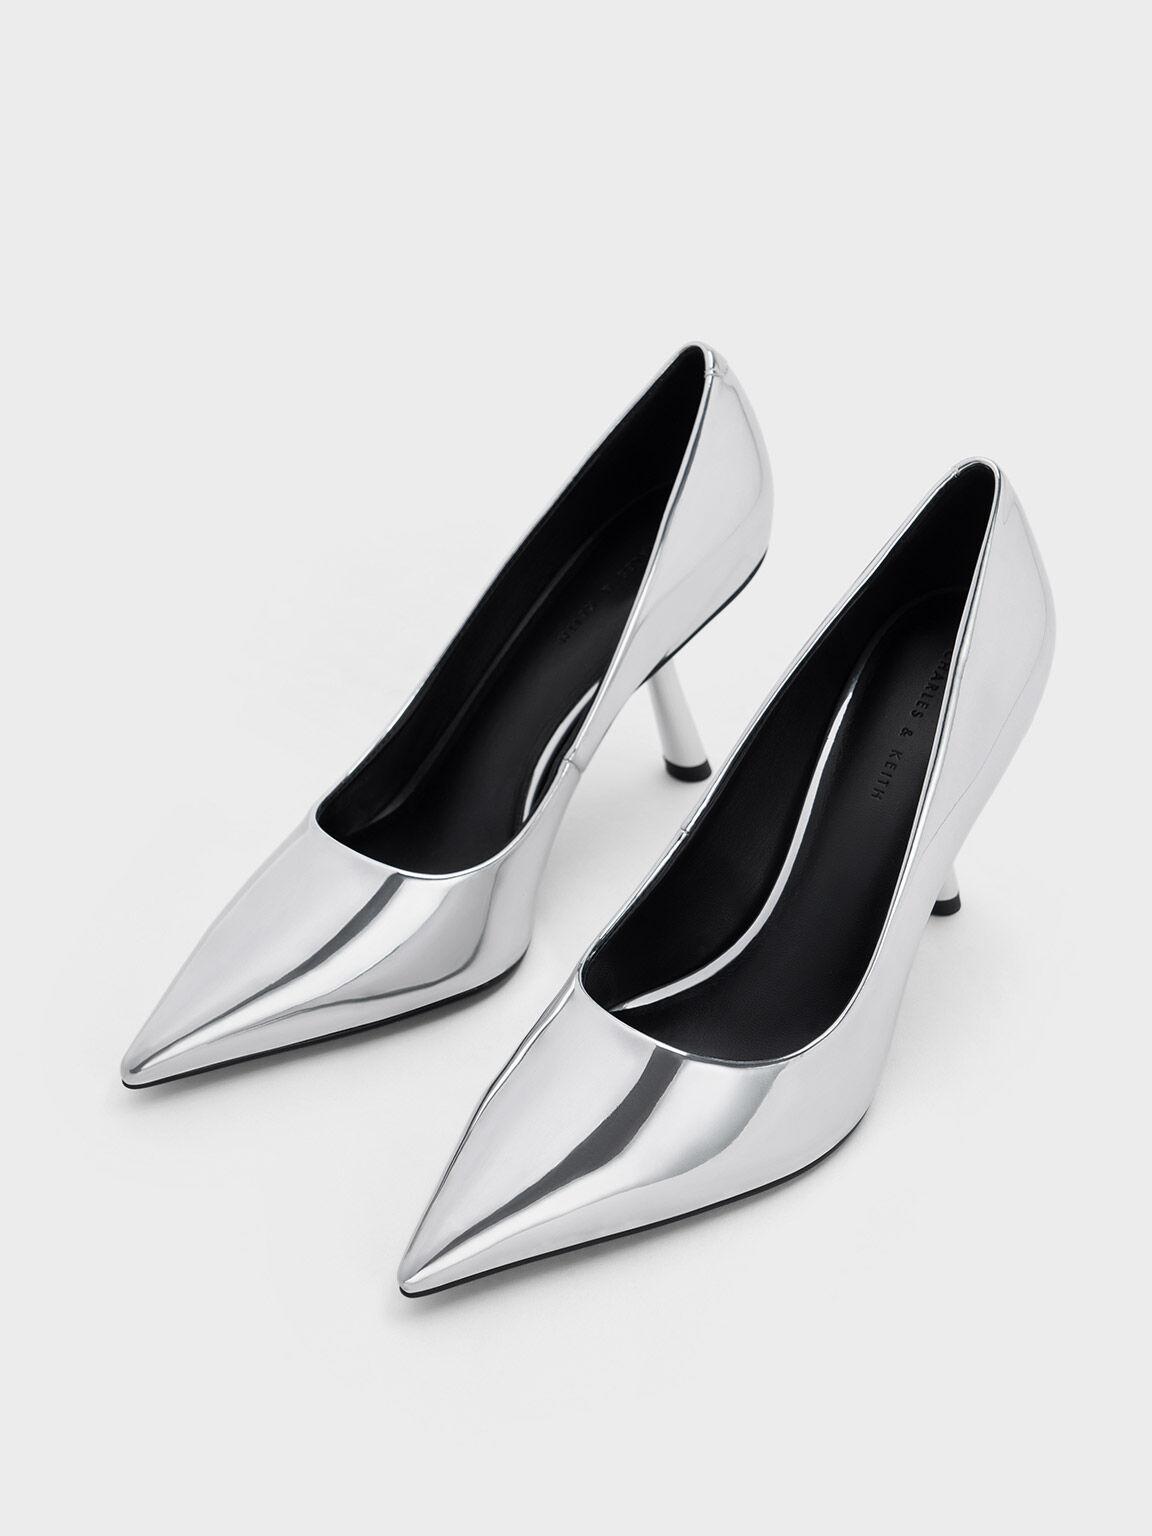 Stiletto Rhinestone Strap Sandal | Silver Heels Sandals Women - Black  Crystal Sexy - Aliexpress